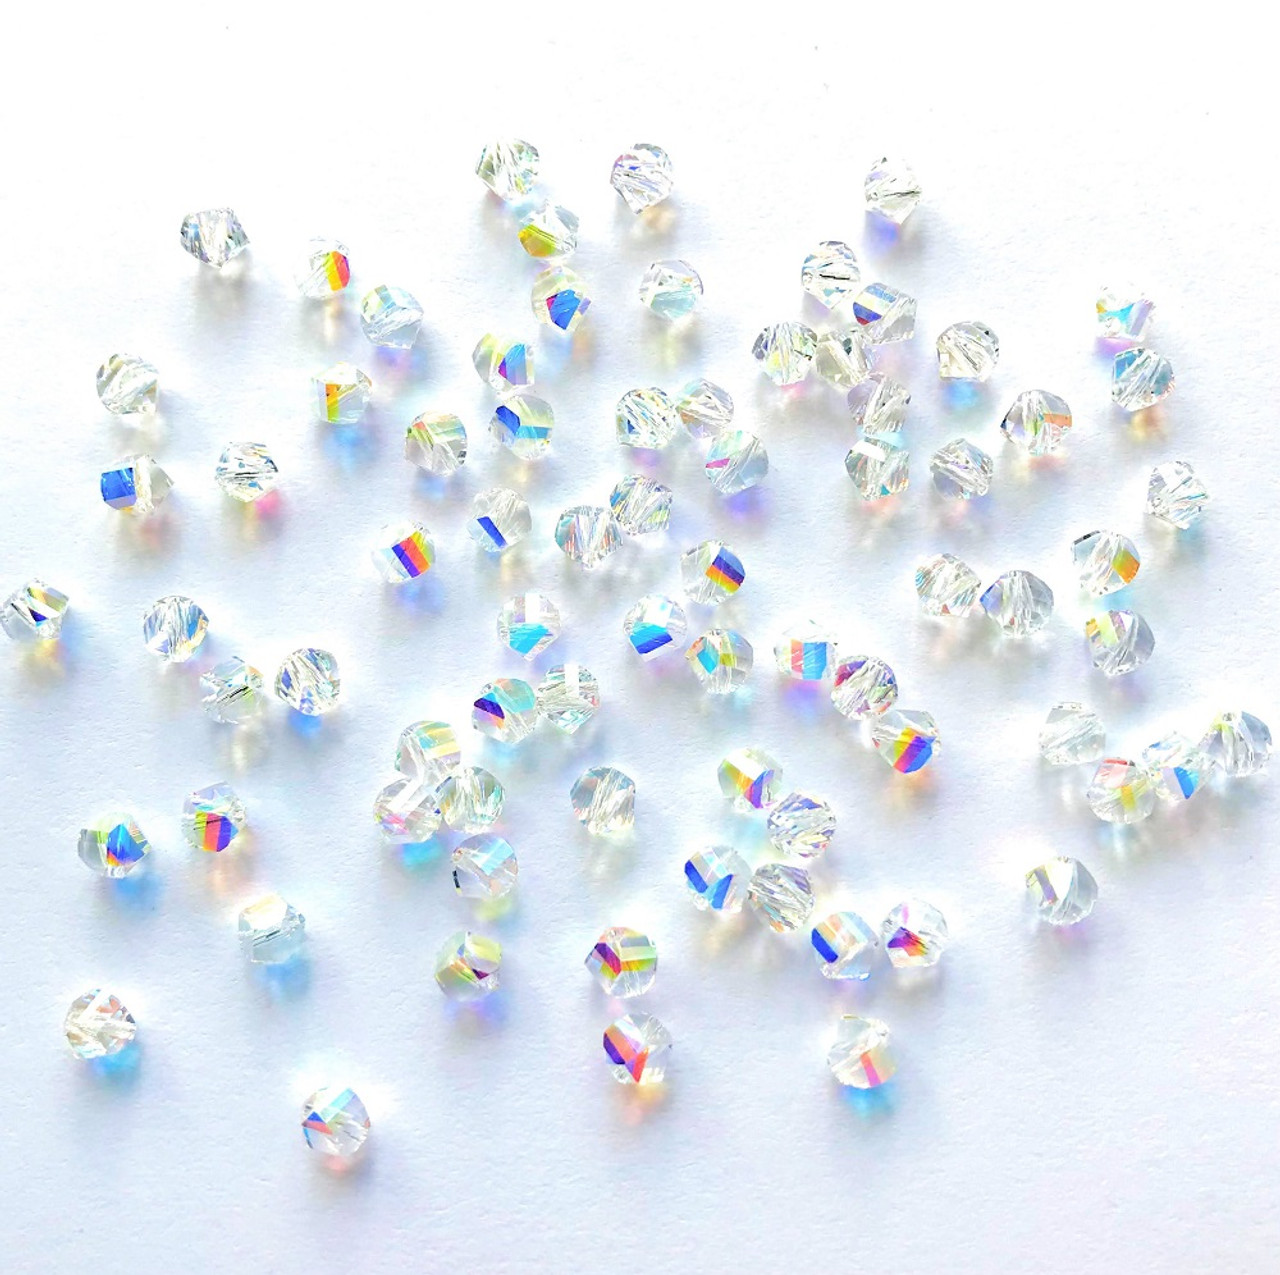 anybeads.com - Swarovski Crystal Beads at Wholesale Price: 2013